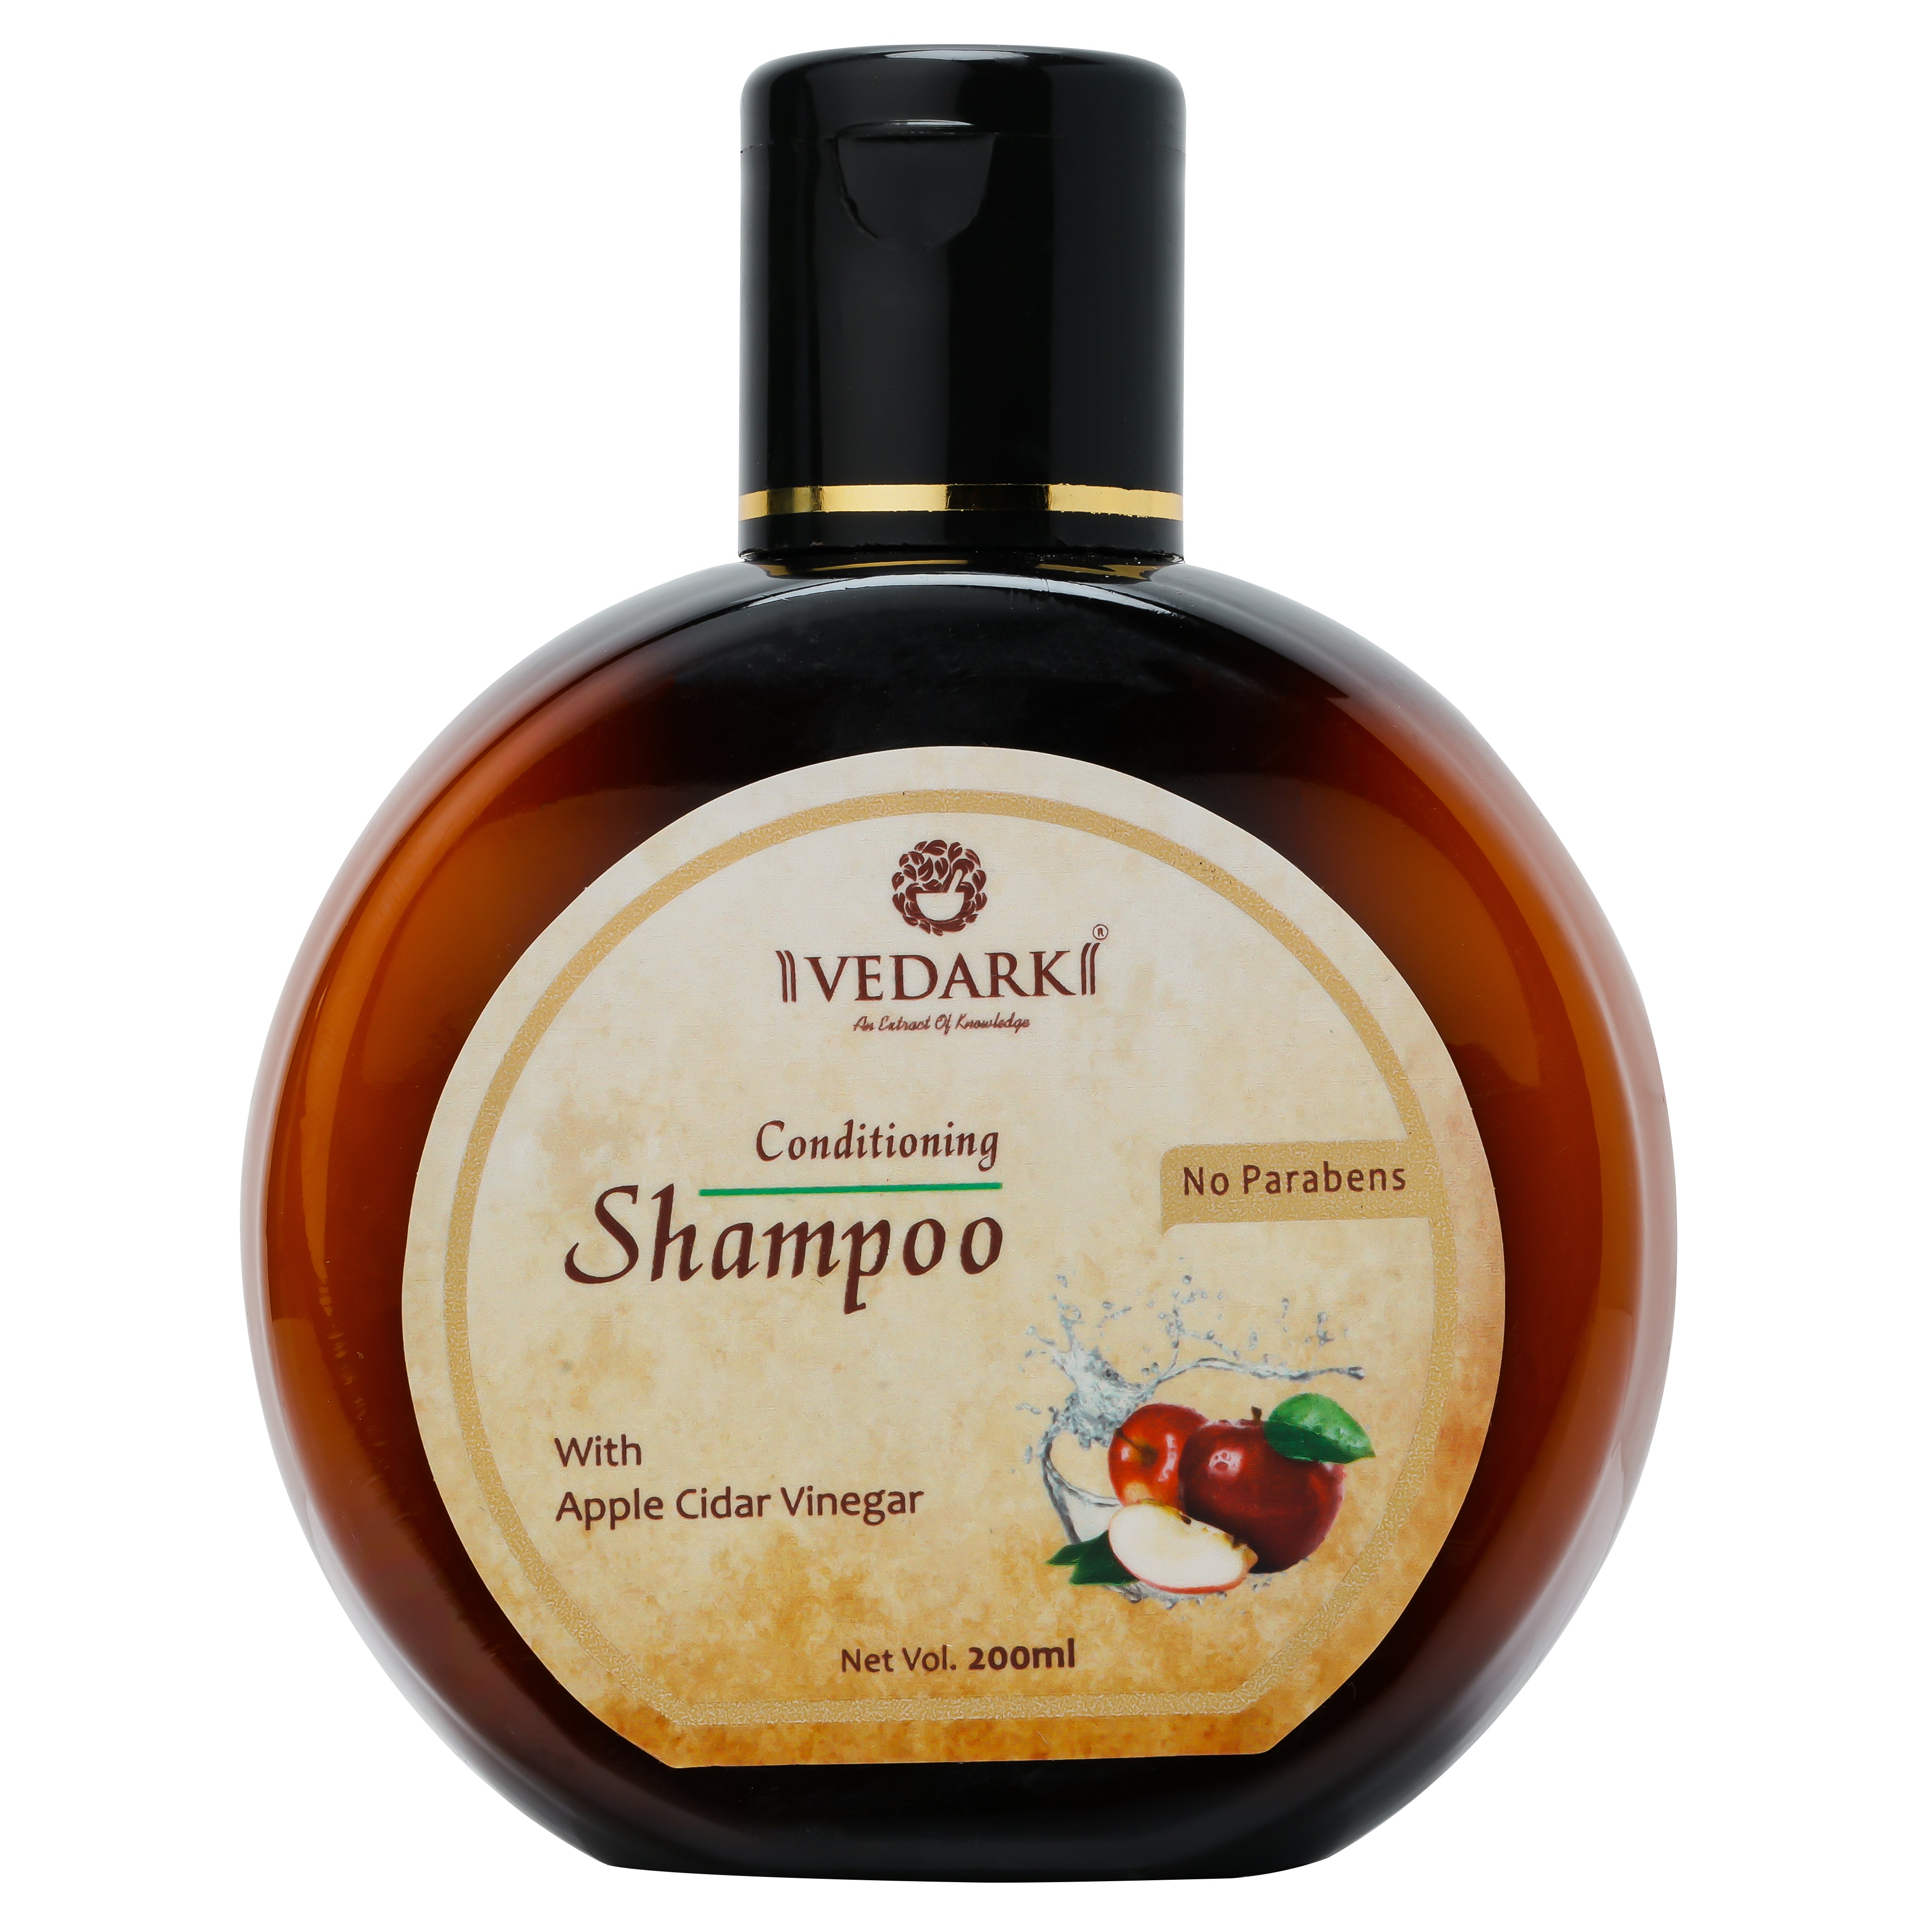 Vedark Conditioning Shampoo 200ml